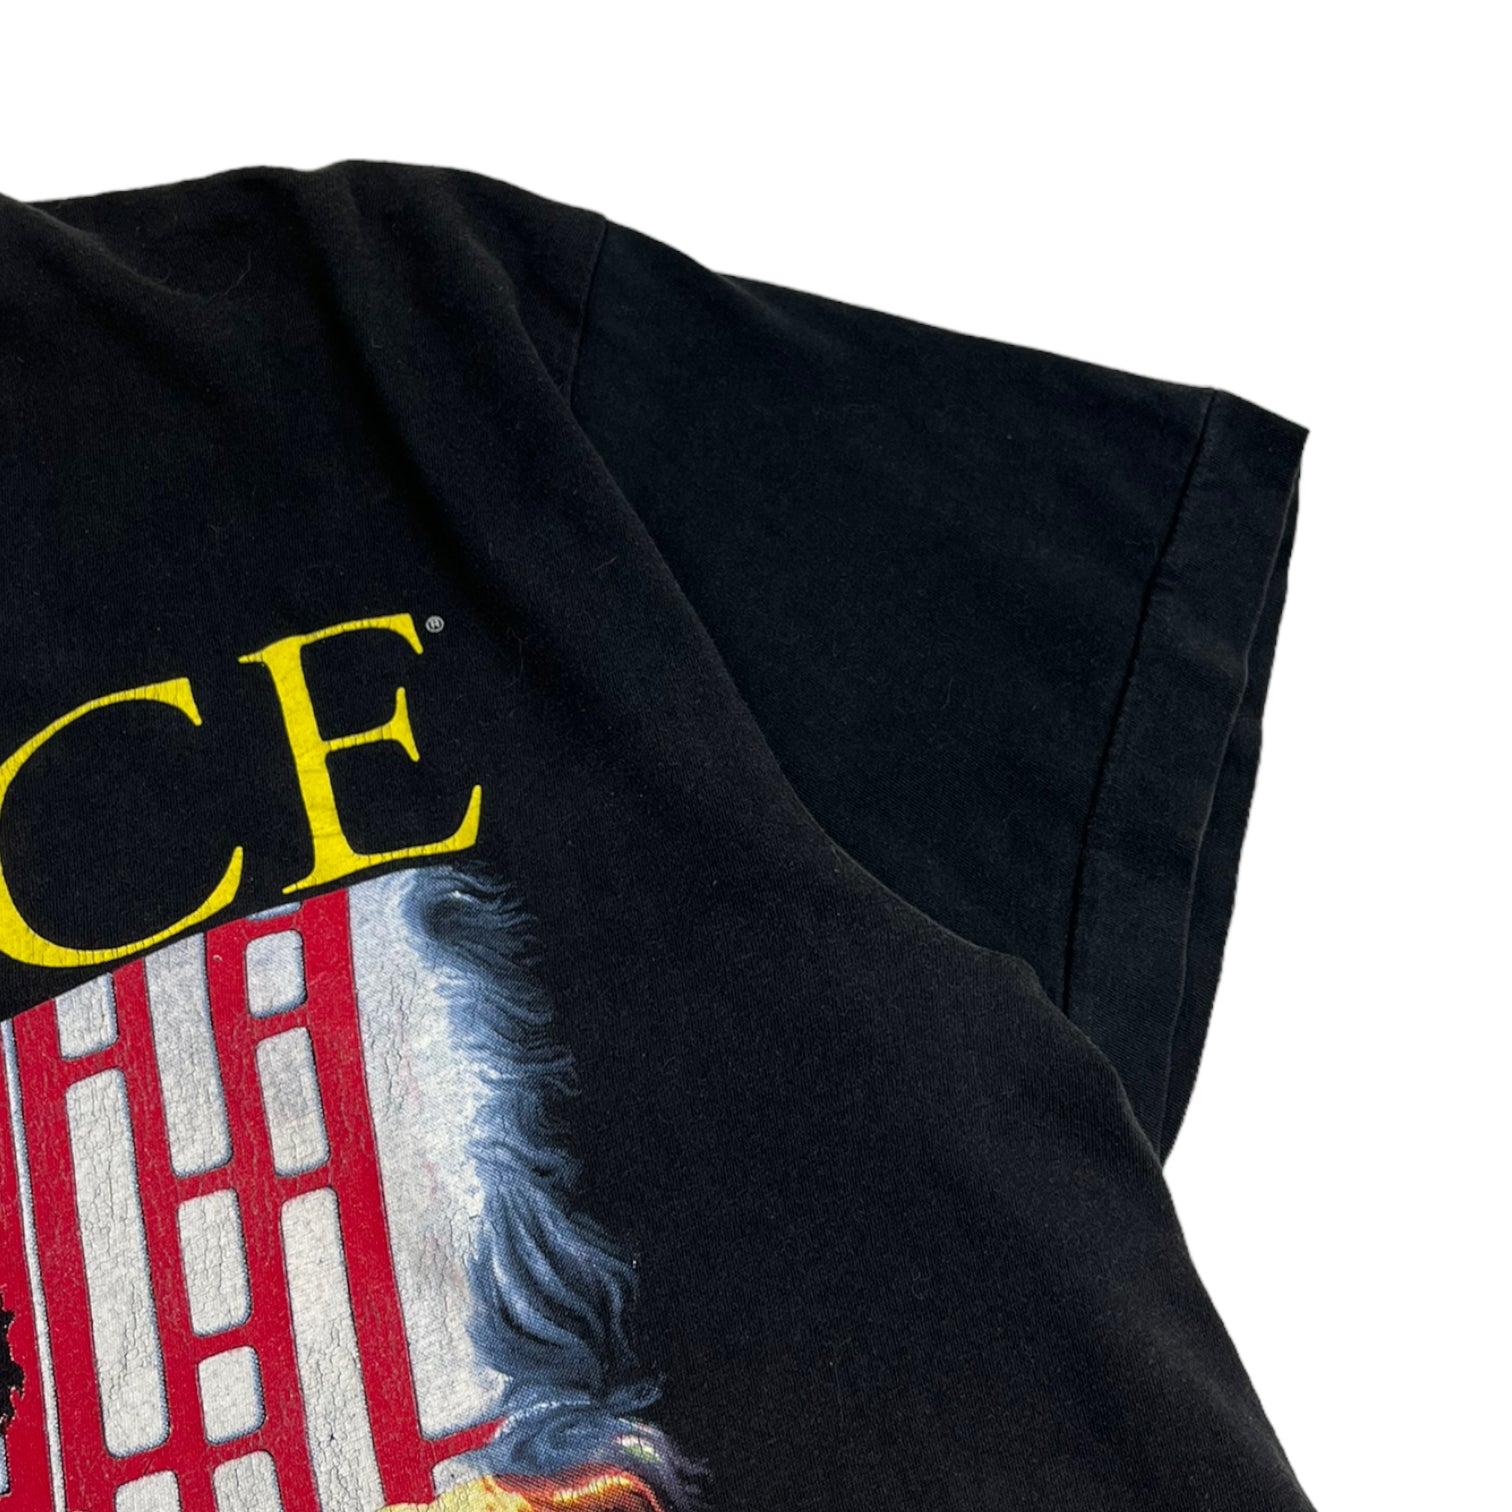 1992 Prince Graphic Shirt - Vintage Music Shirt